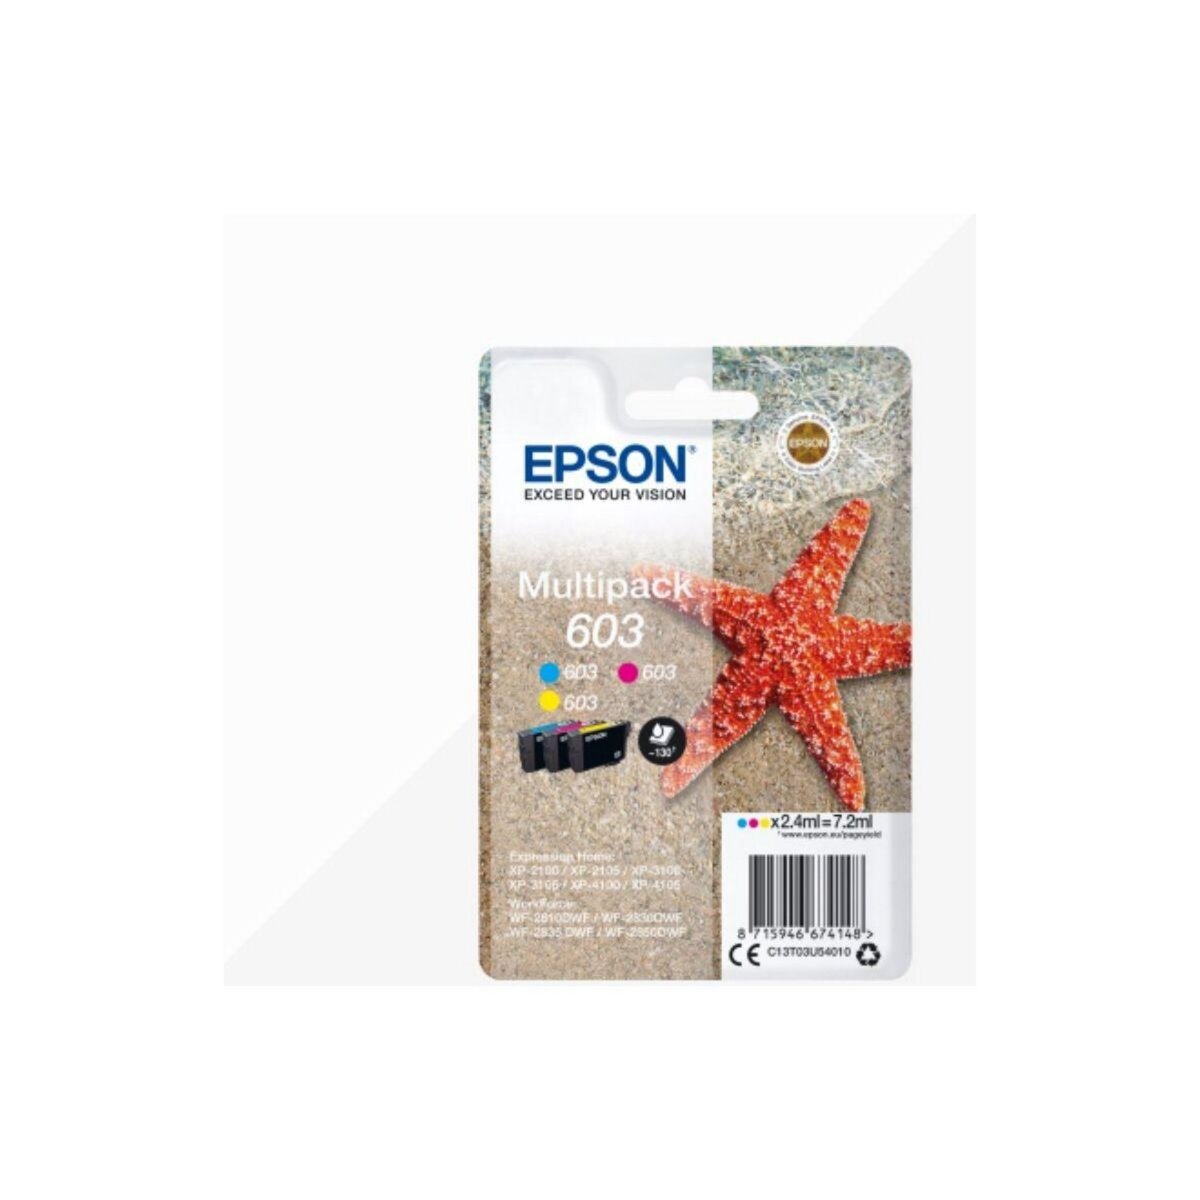 Cartouches EPSON compatibles 603 XL ( série étoile de mer) Pack 4  cartouches XL